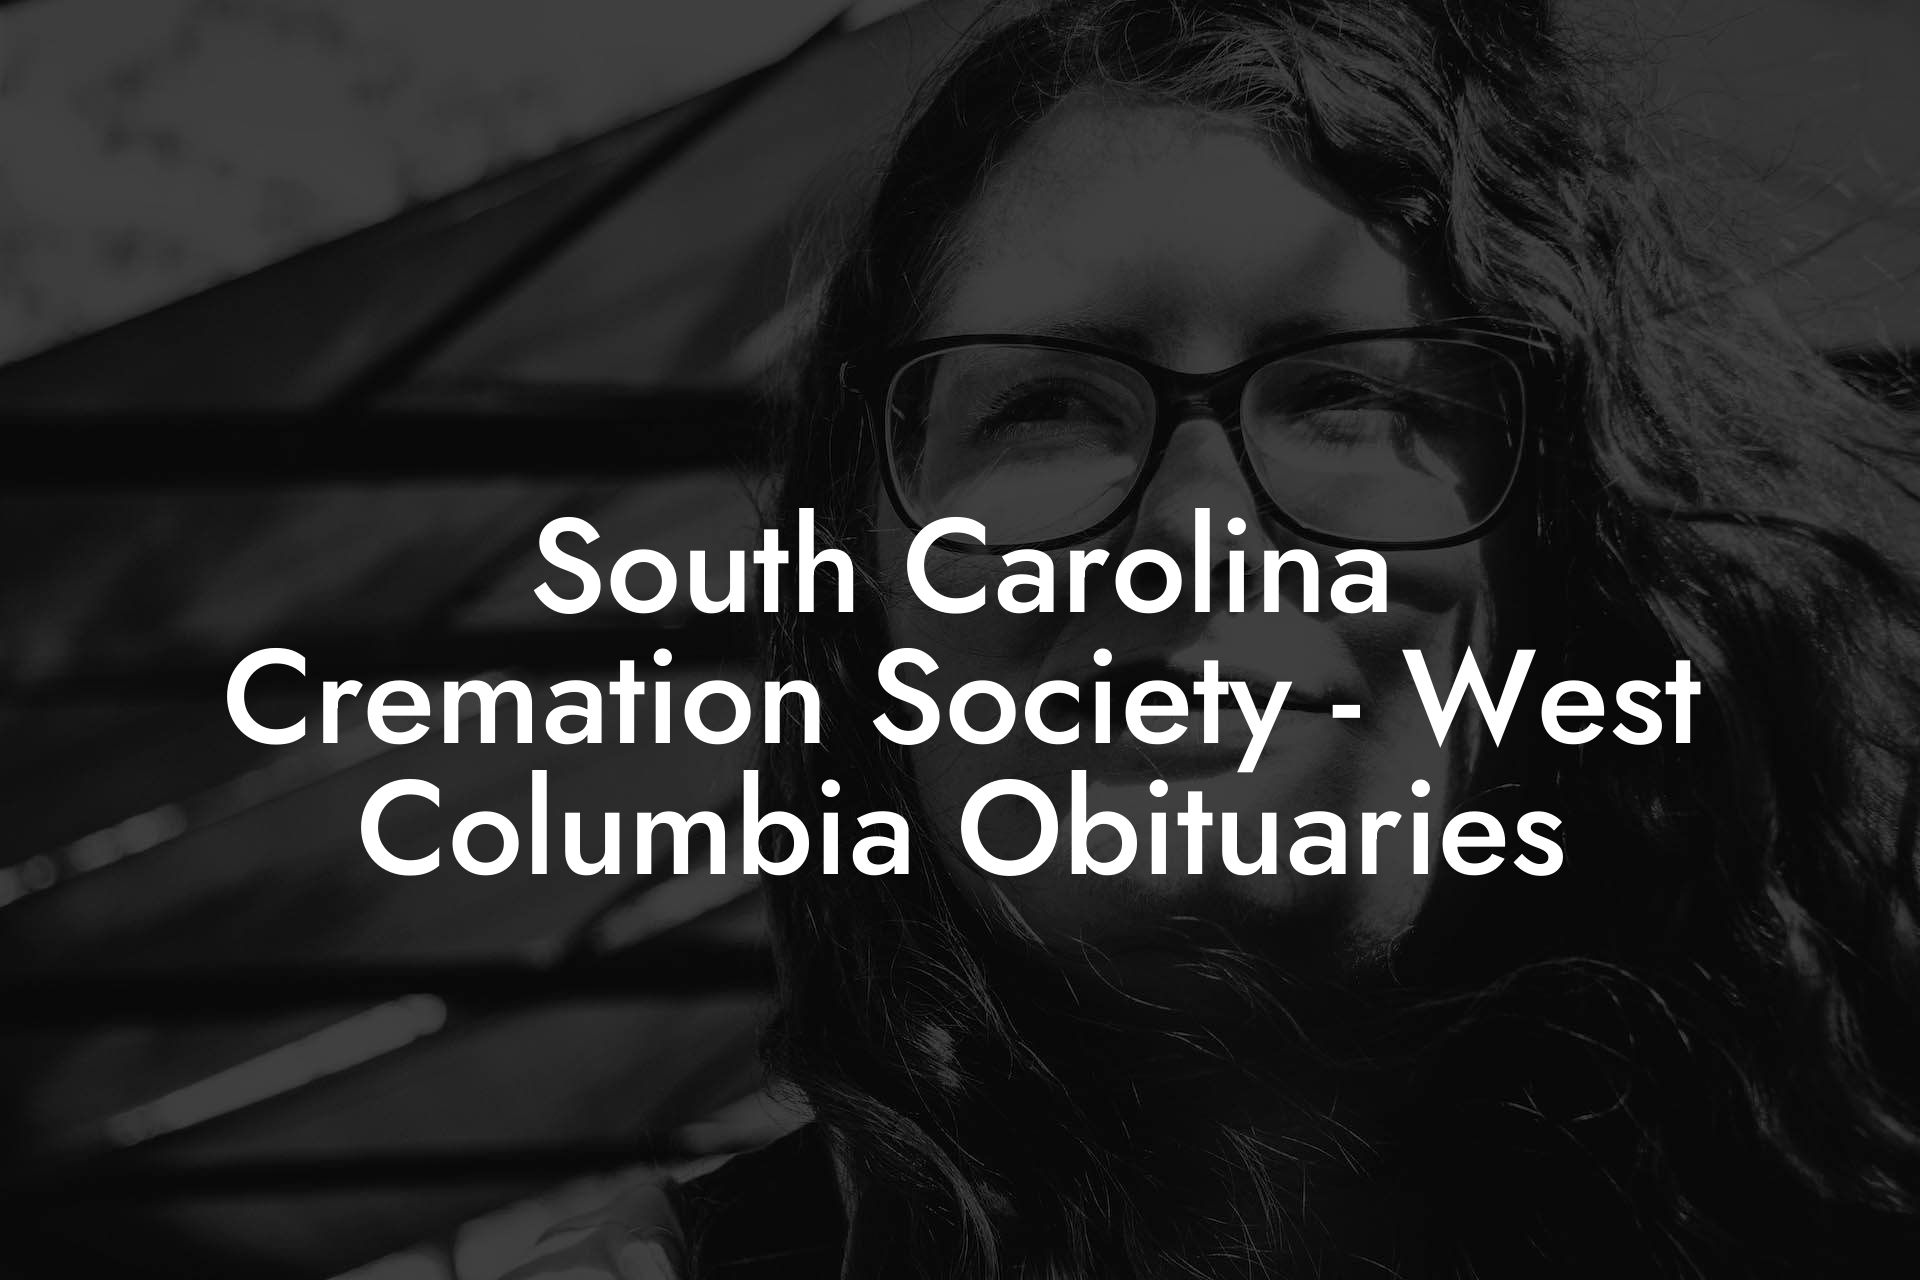 South Carolina Cremation Society - West Columbia Obituaries